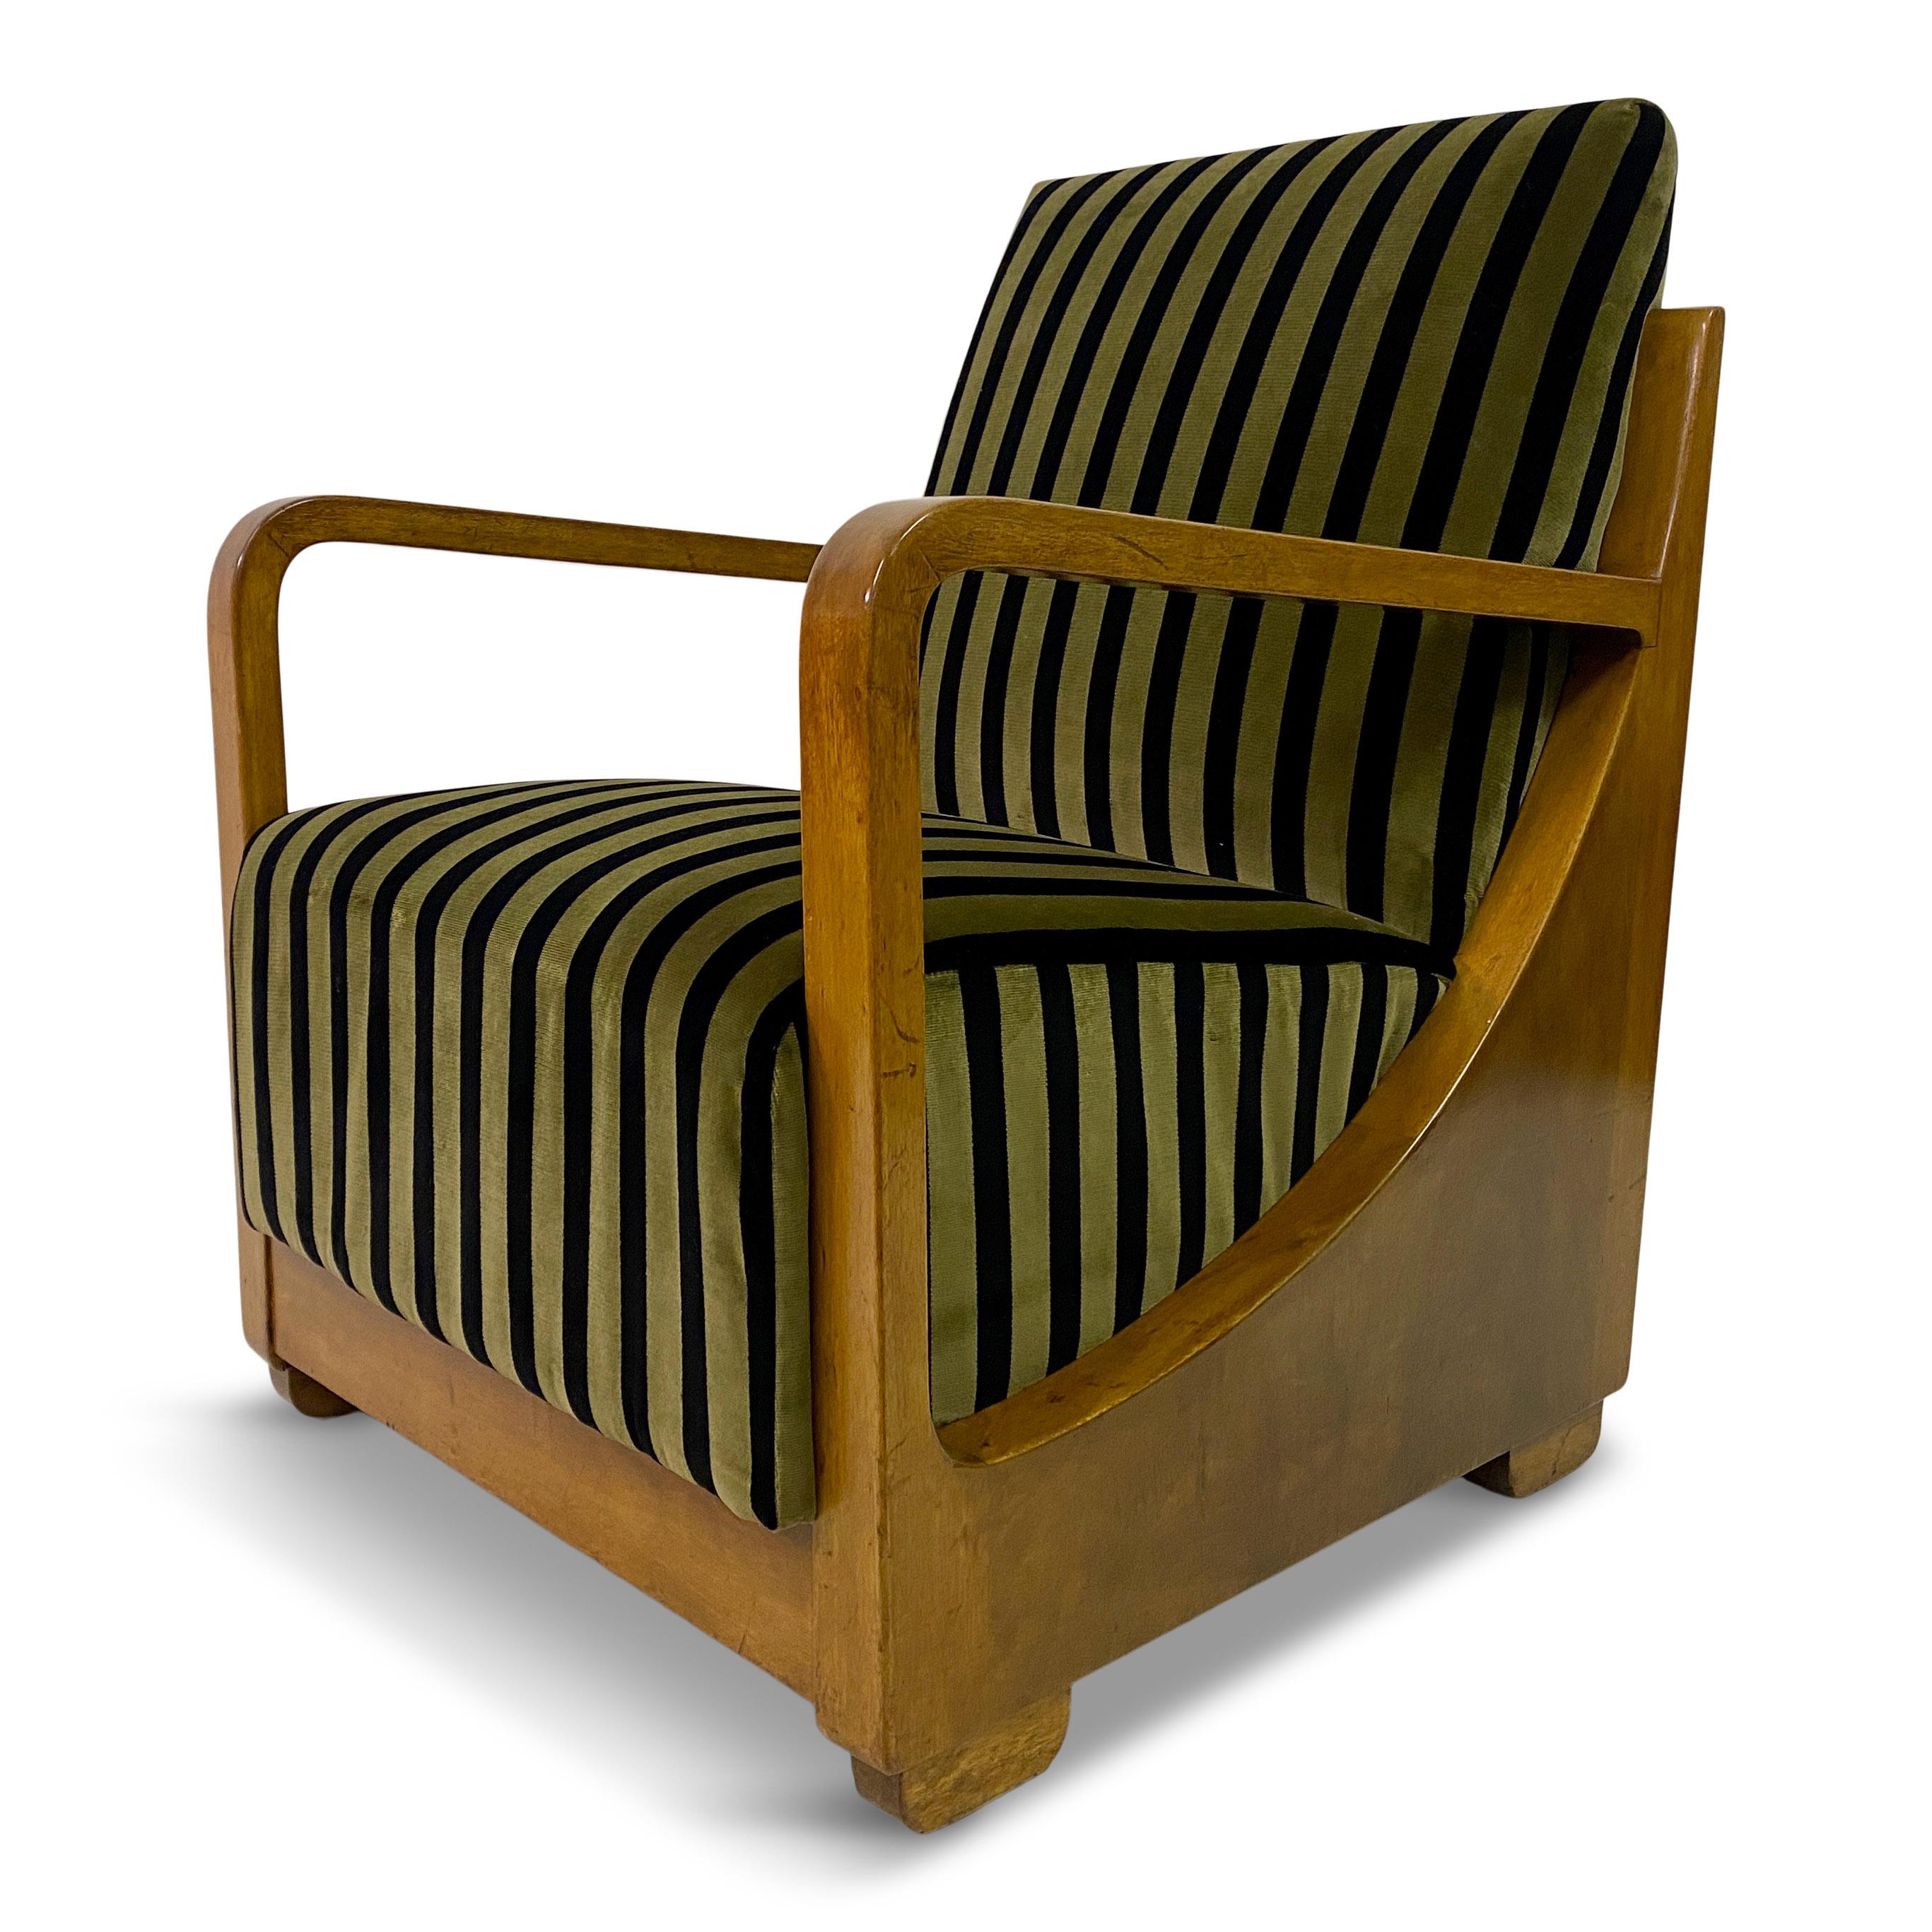 Armchair

Great geometric shape

New Christian Lacroix velvet upholstery

Dutch 1930s

Seat height 42cm